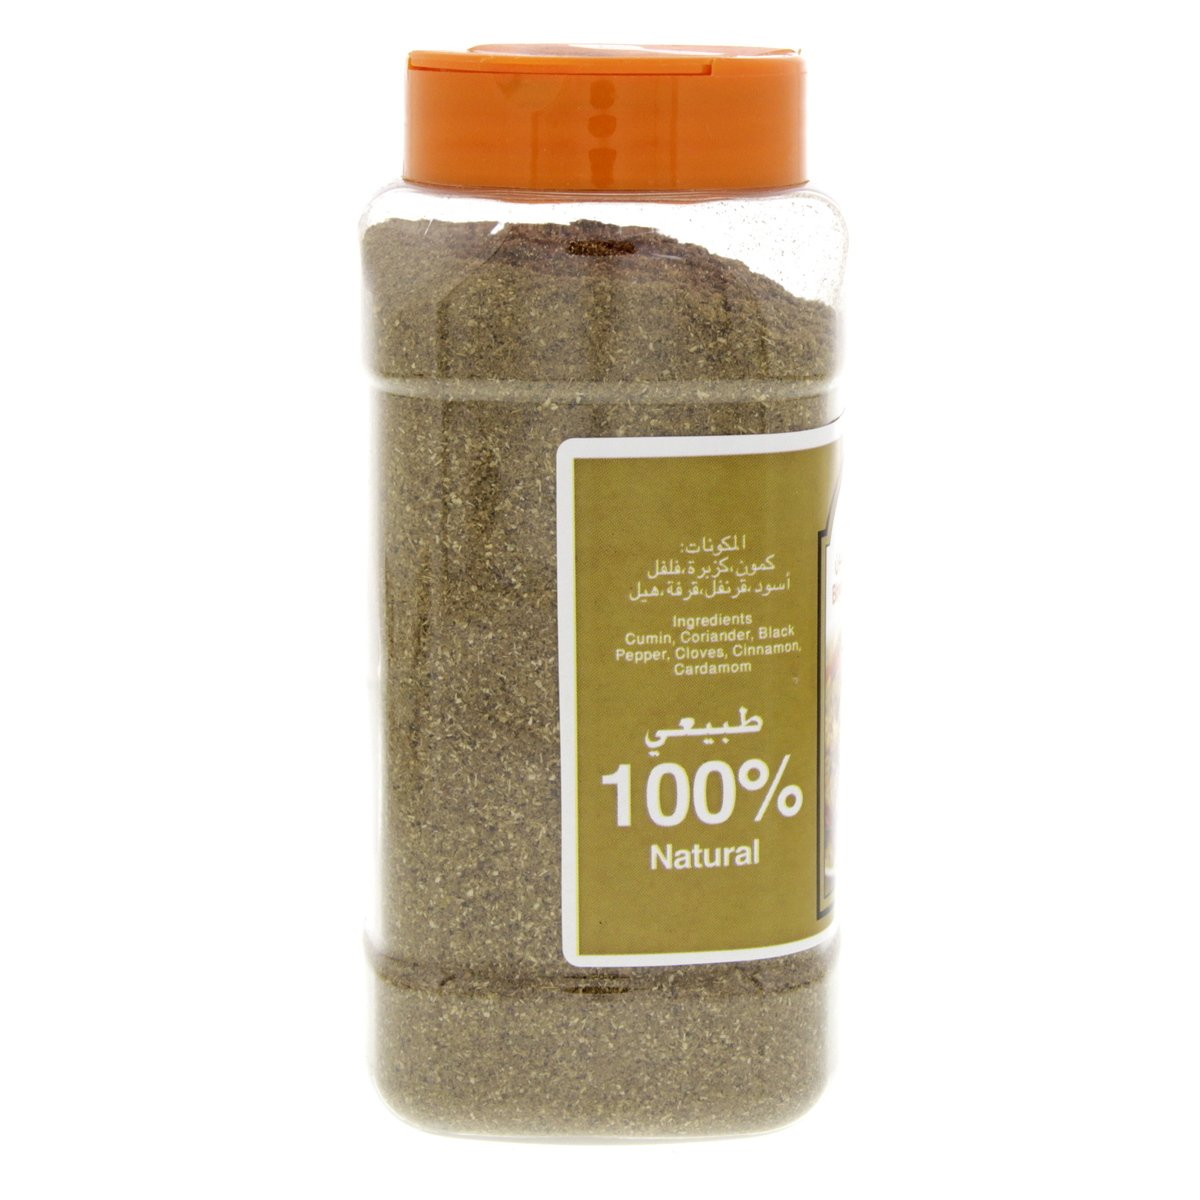 Al Fares Biryani Masala Powder 250 g